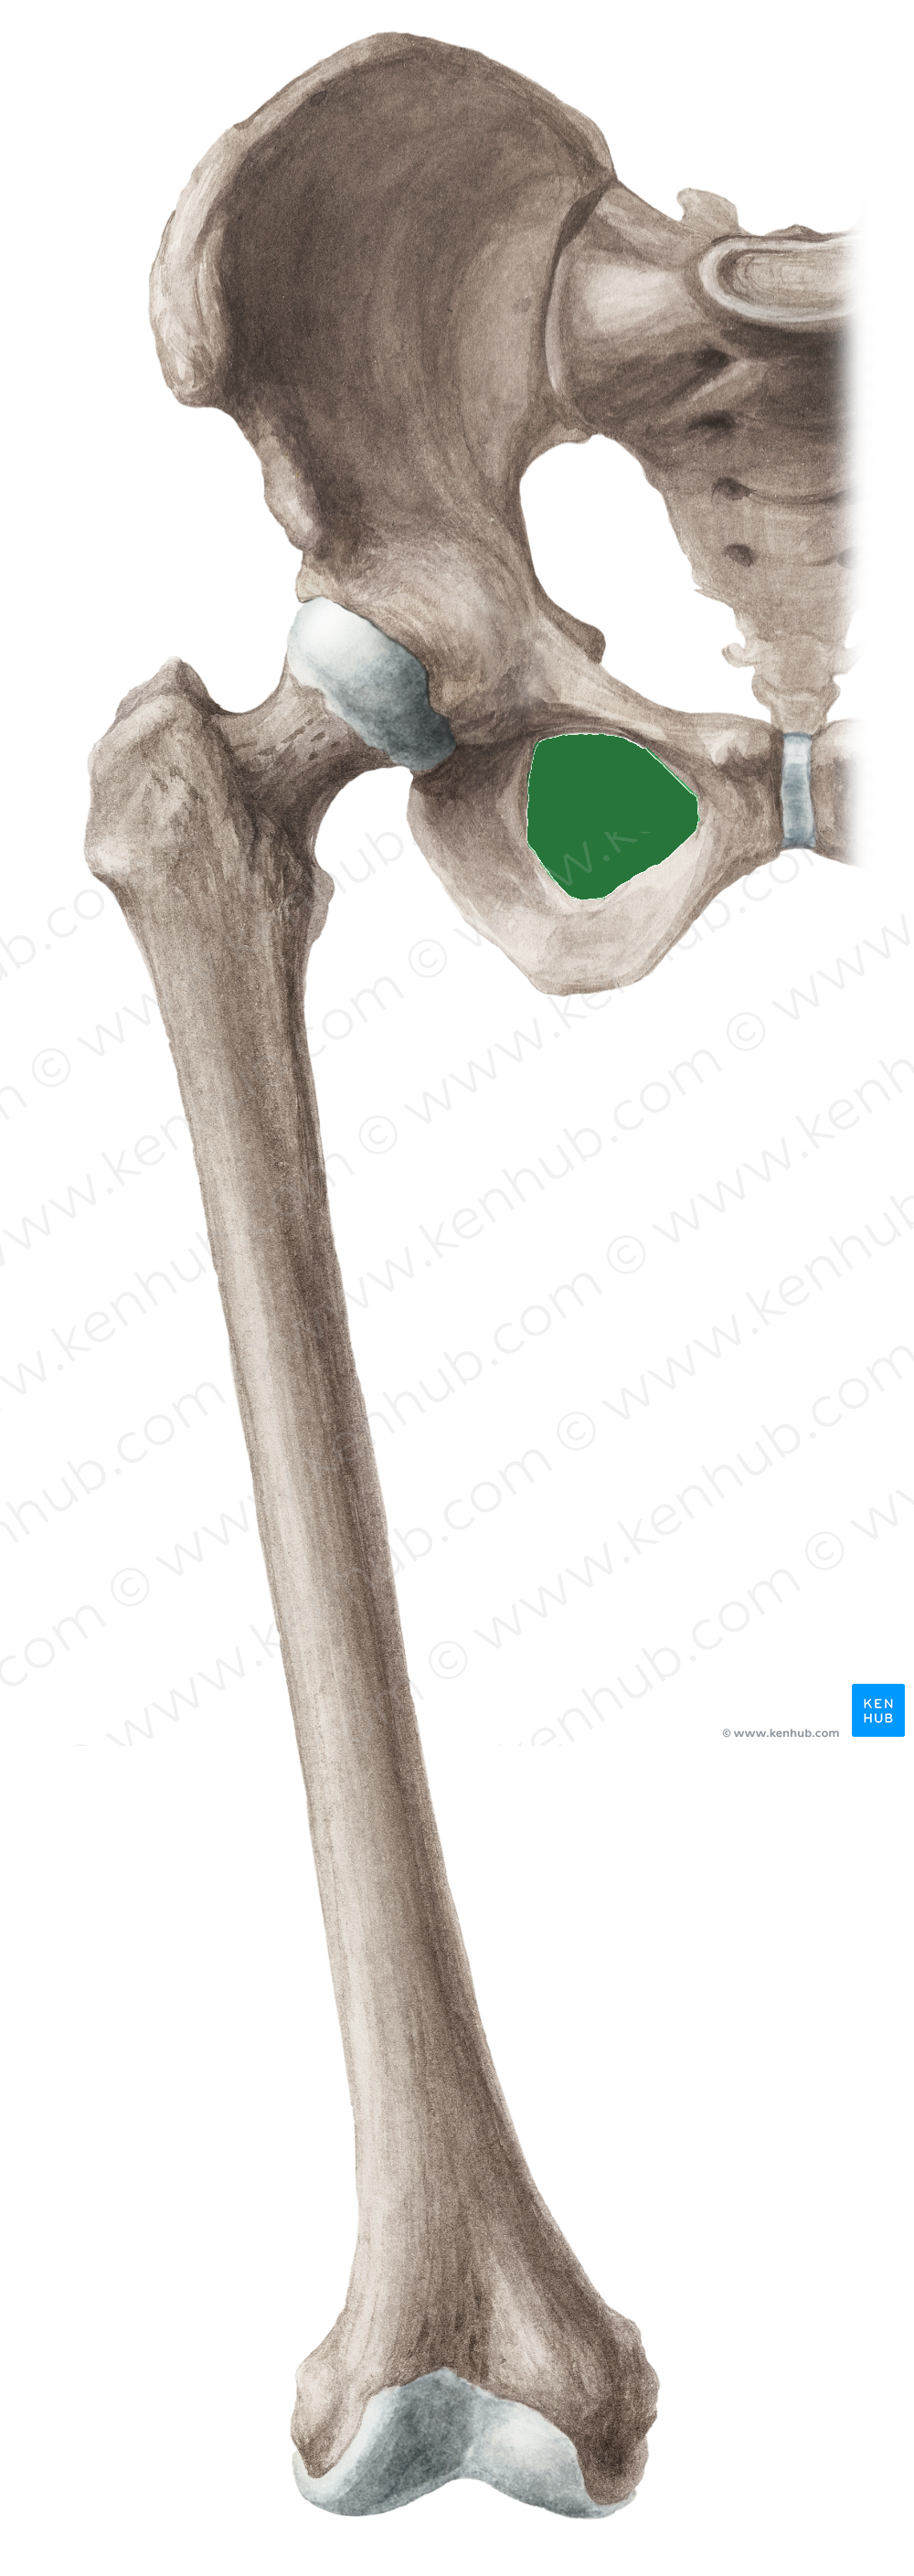 Obturator foramen of hip bone (#3780)